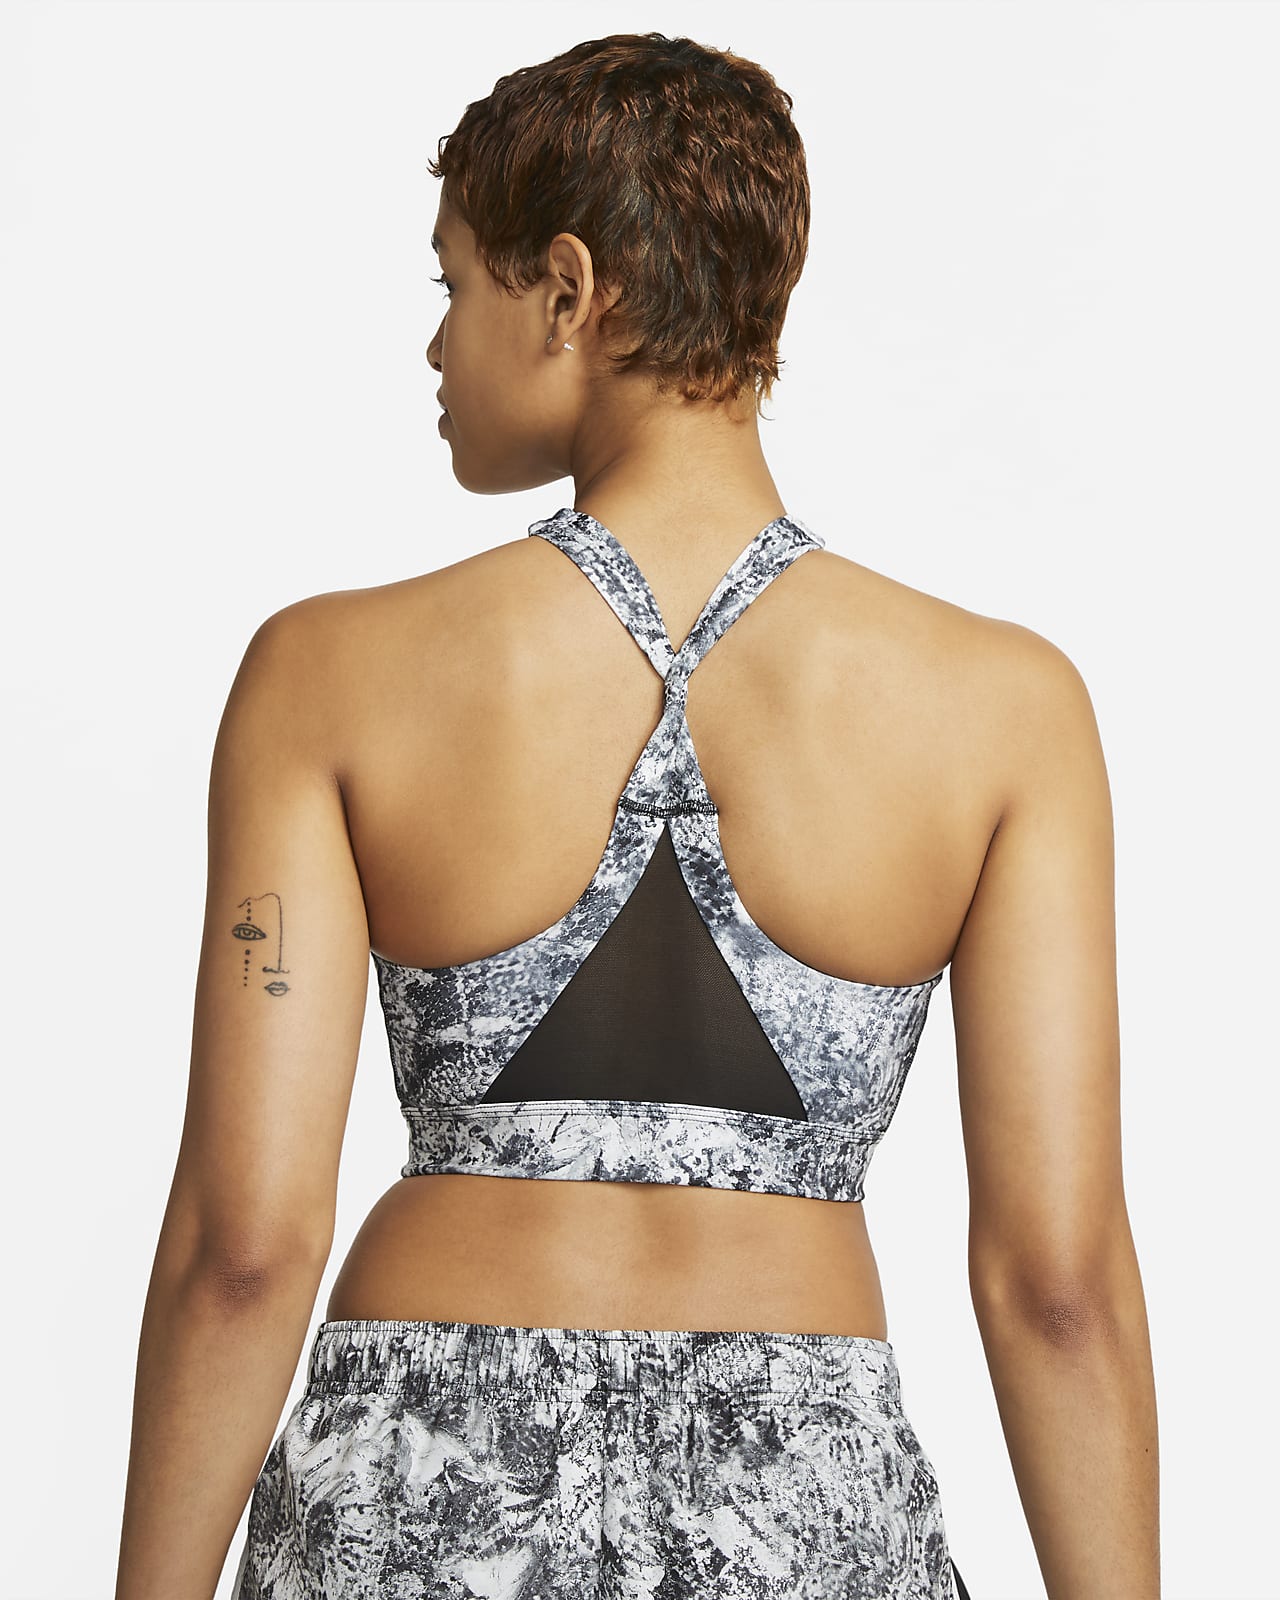 Nike swoosh air medium support sports bra in black & white